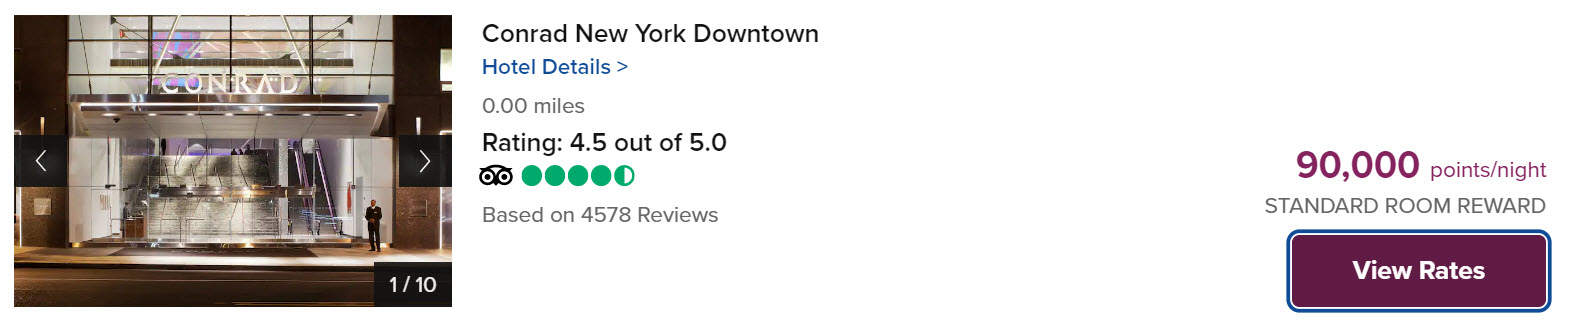 Conrad New York Downtown - Booking